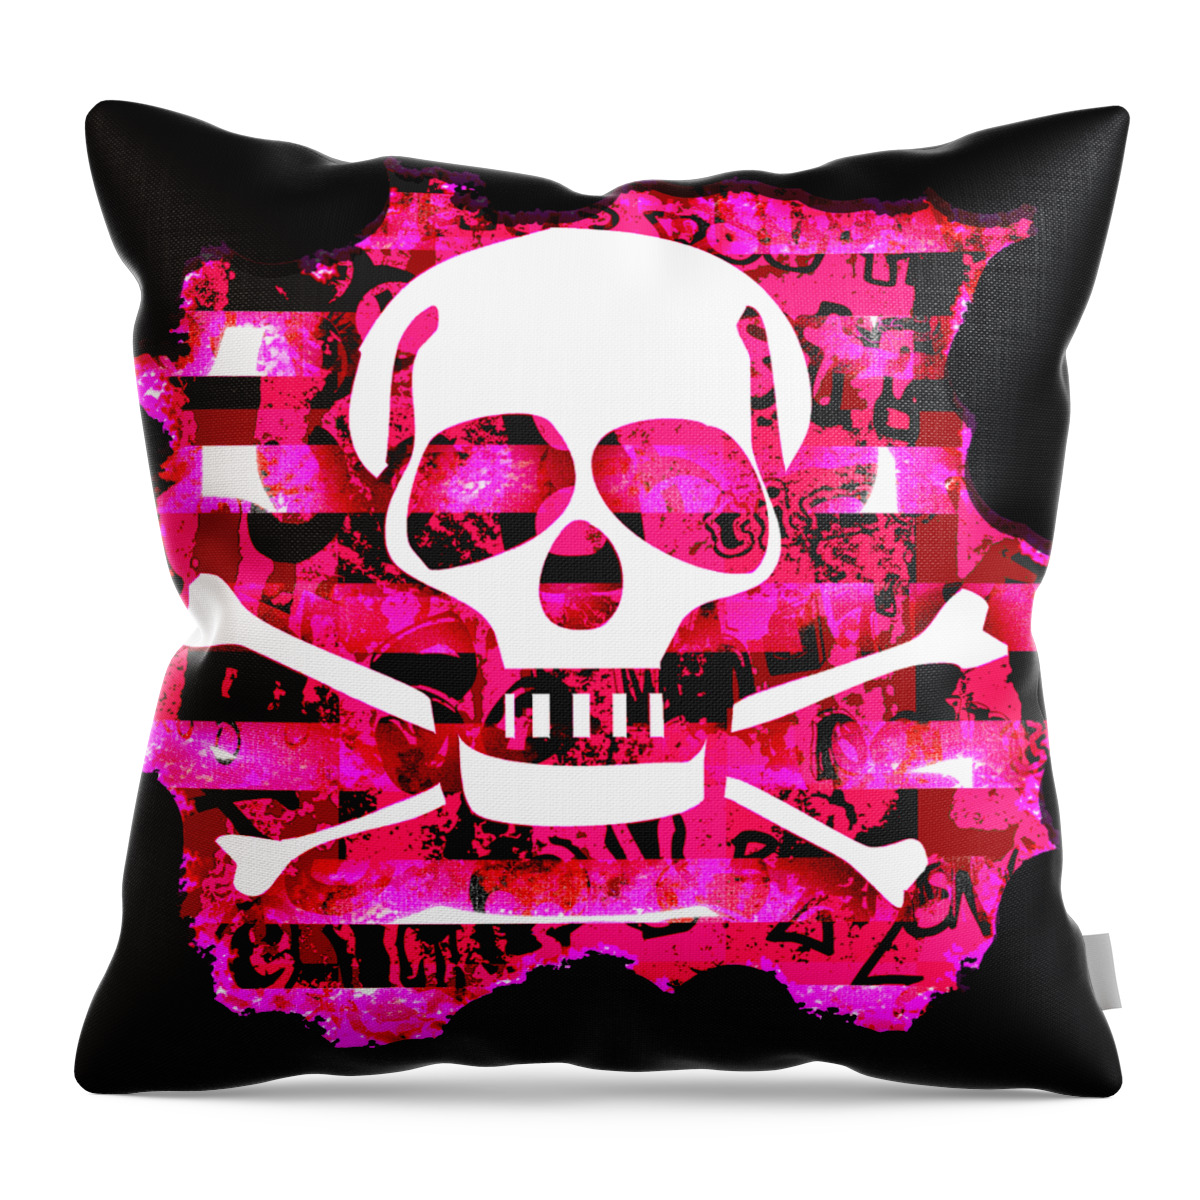 Skull Throw Pillow featuring the digital art Pink Skull Crossbones Graphic by Roseanne Jones